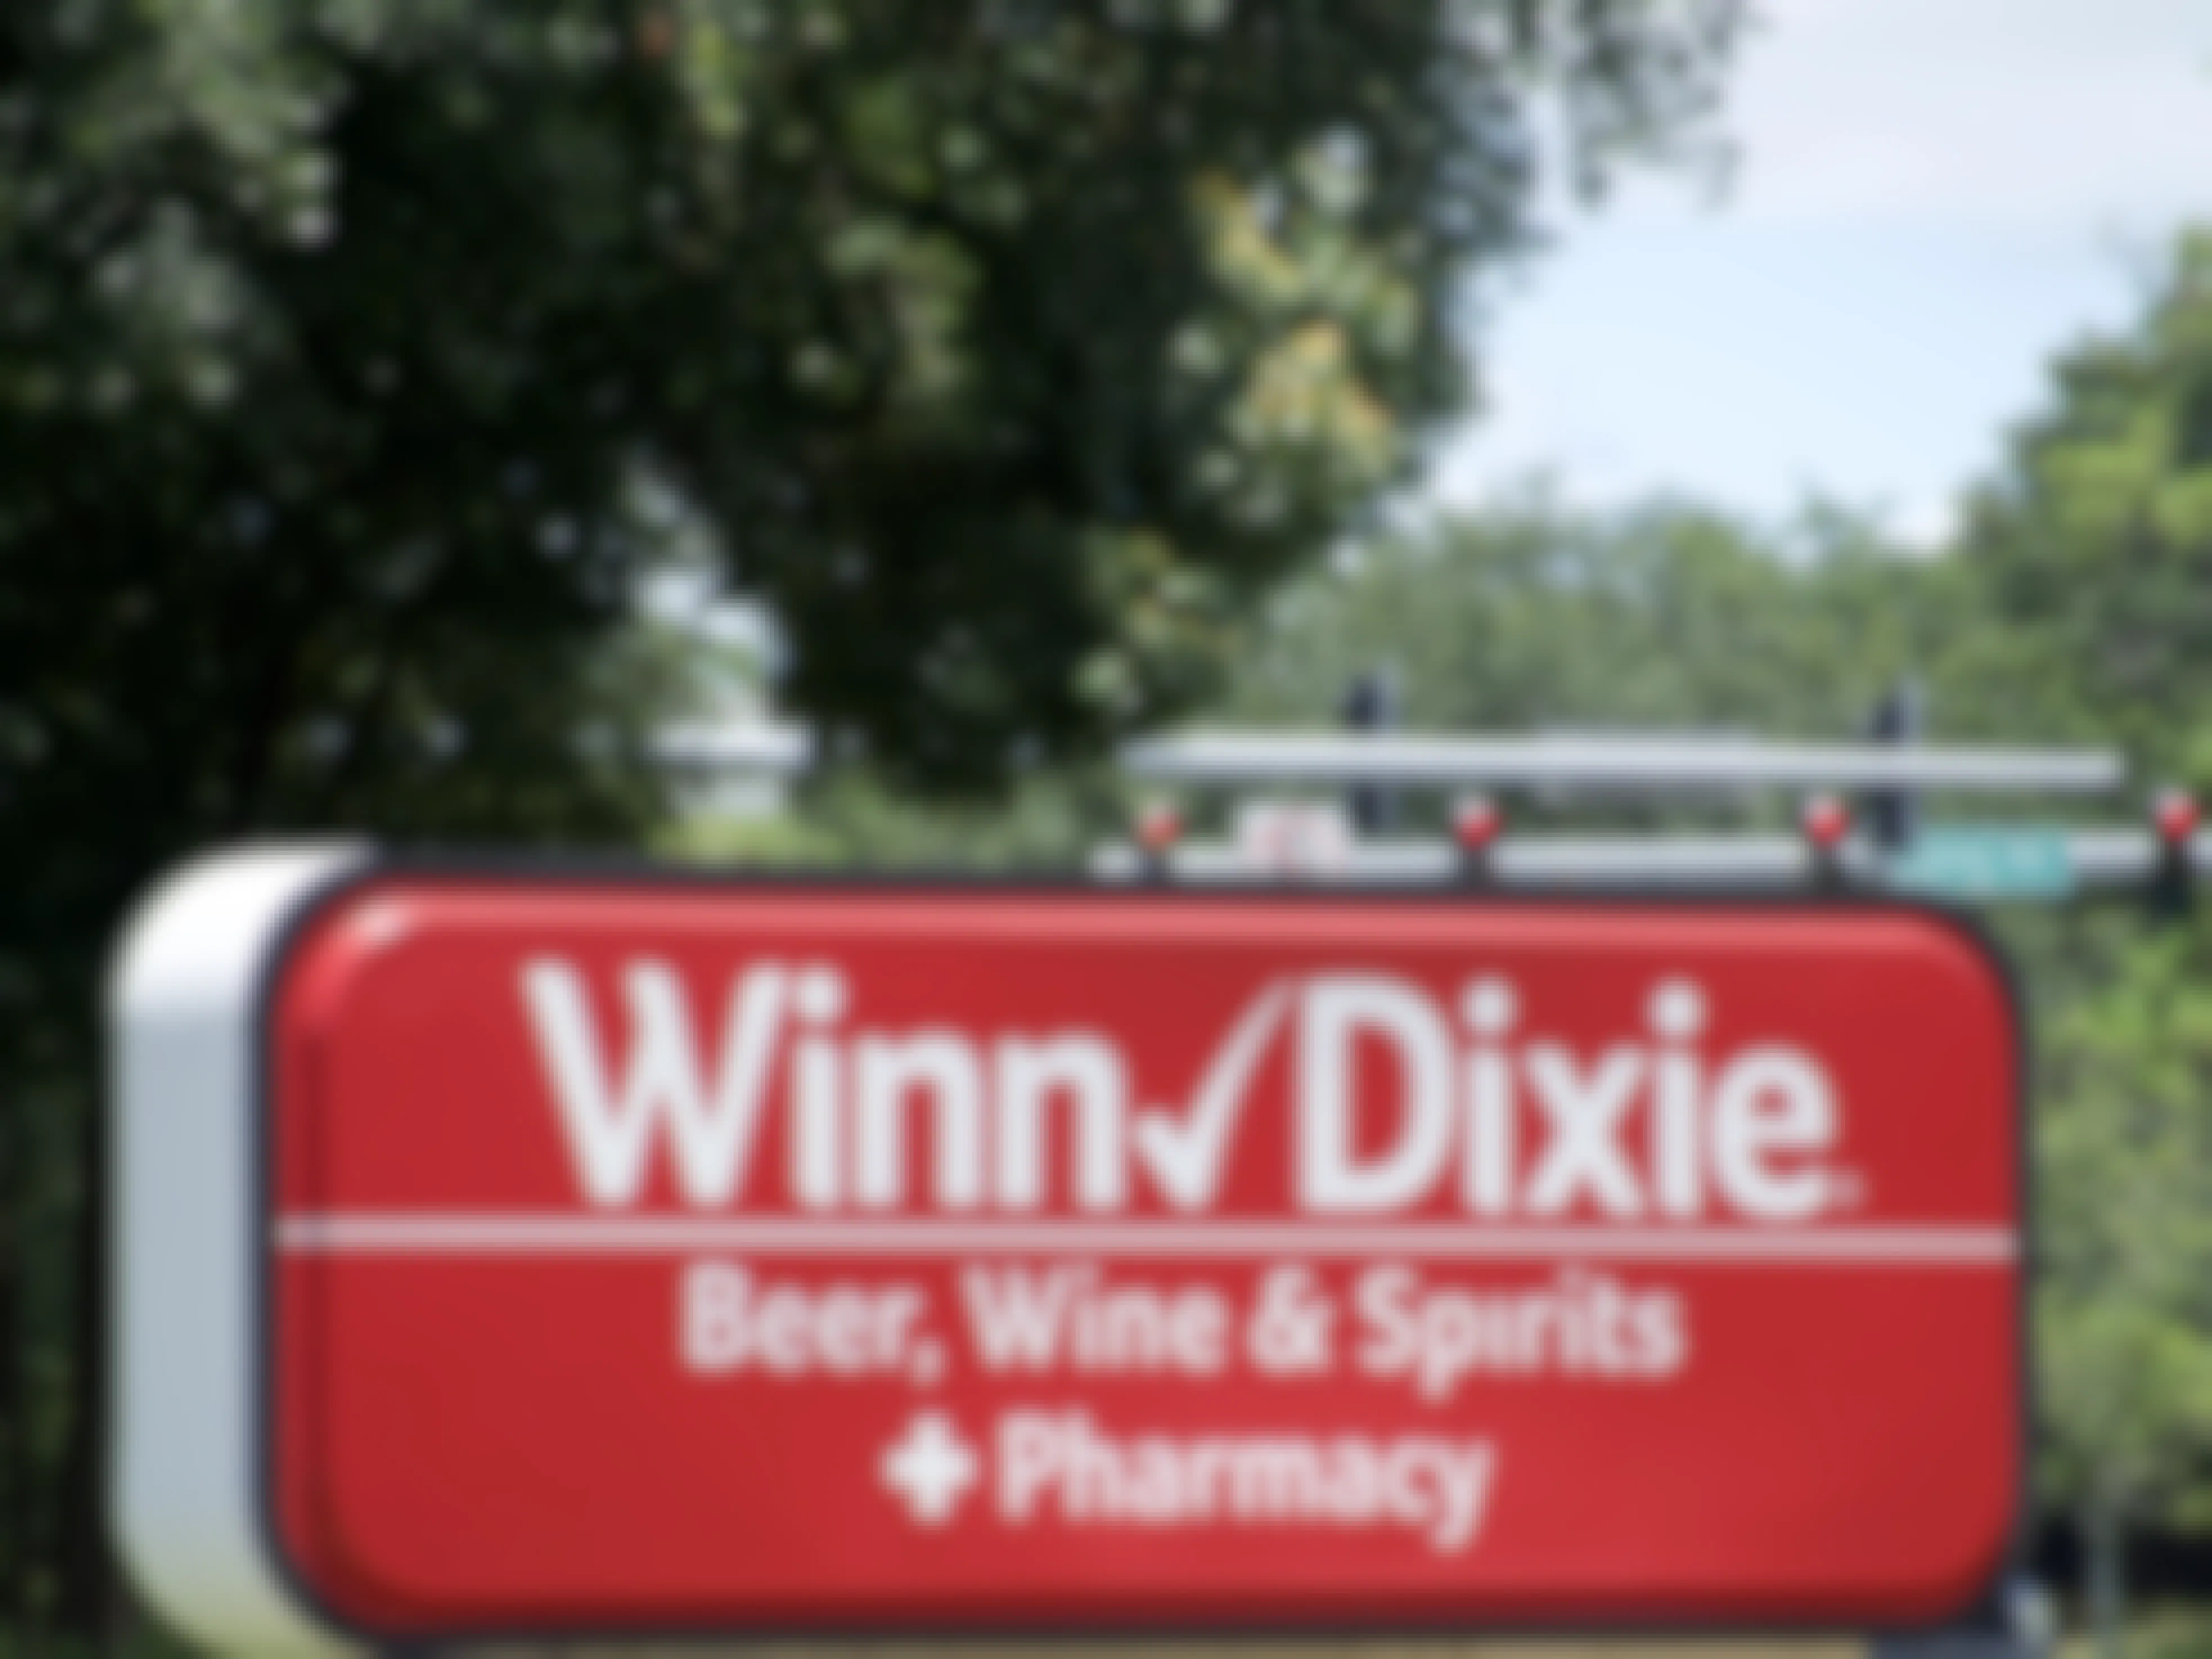 Winn Dixie store sign